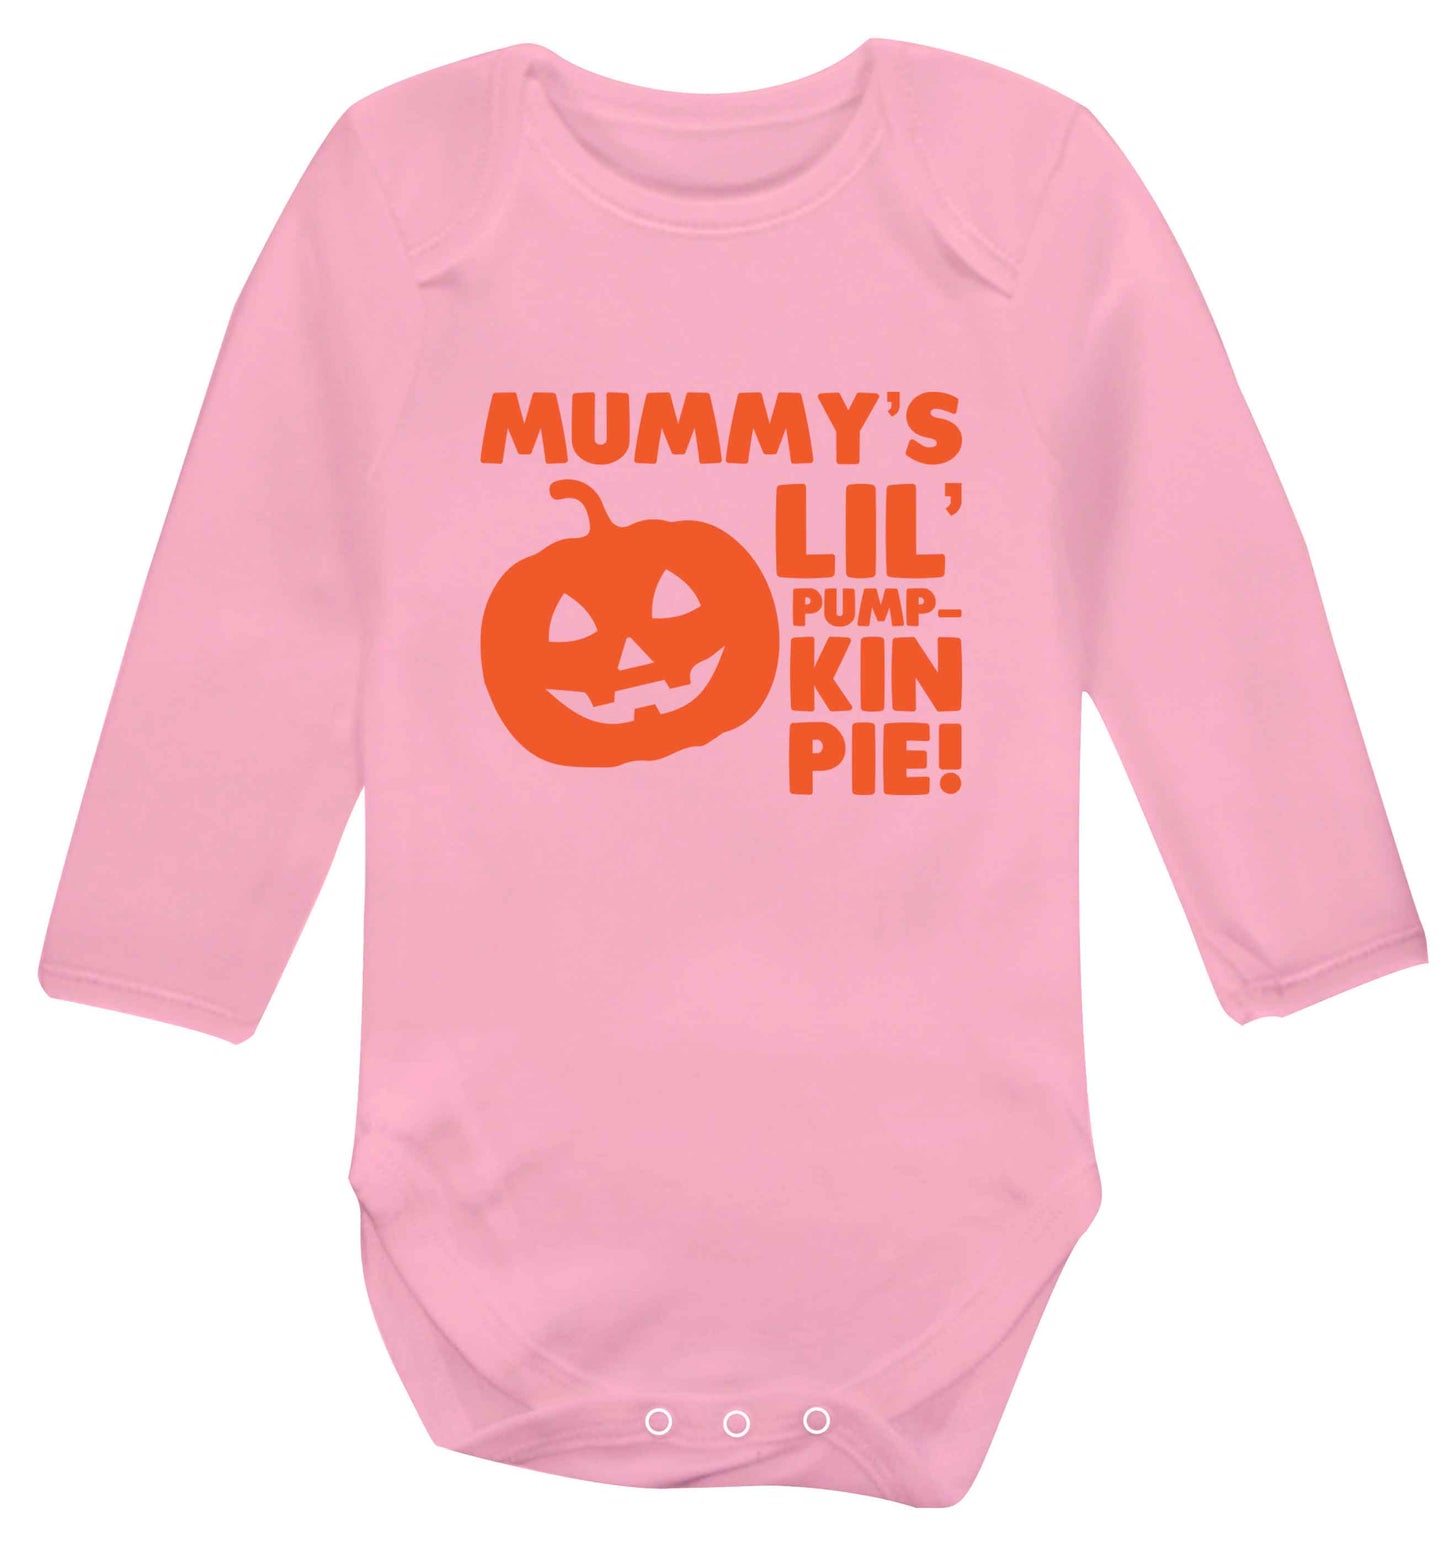 Mummy's lil' pumpkin pie baby vest long sleeved pale pink 6-12 months